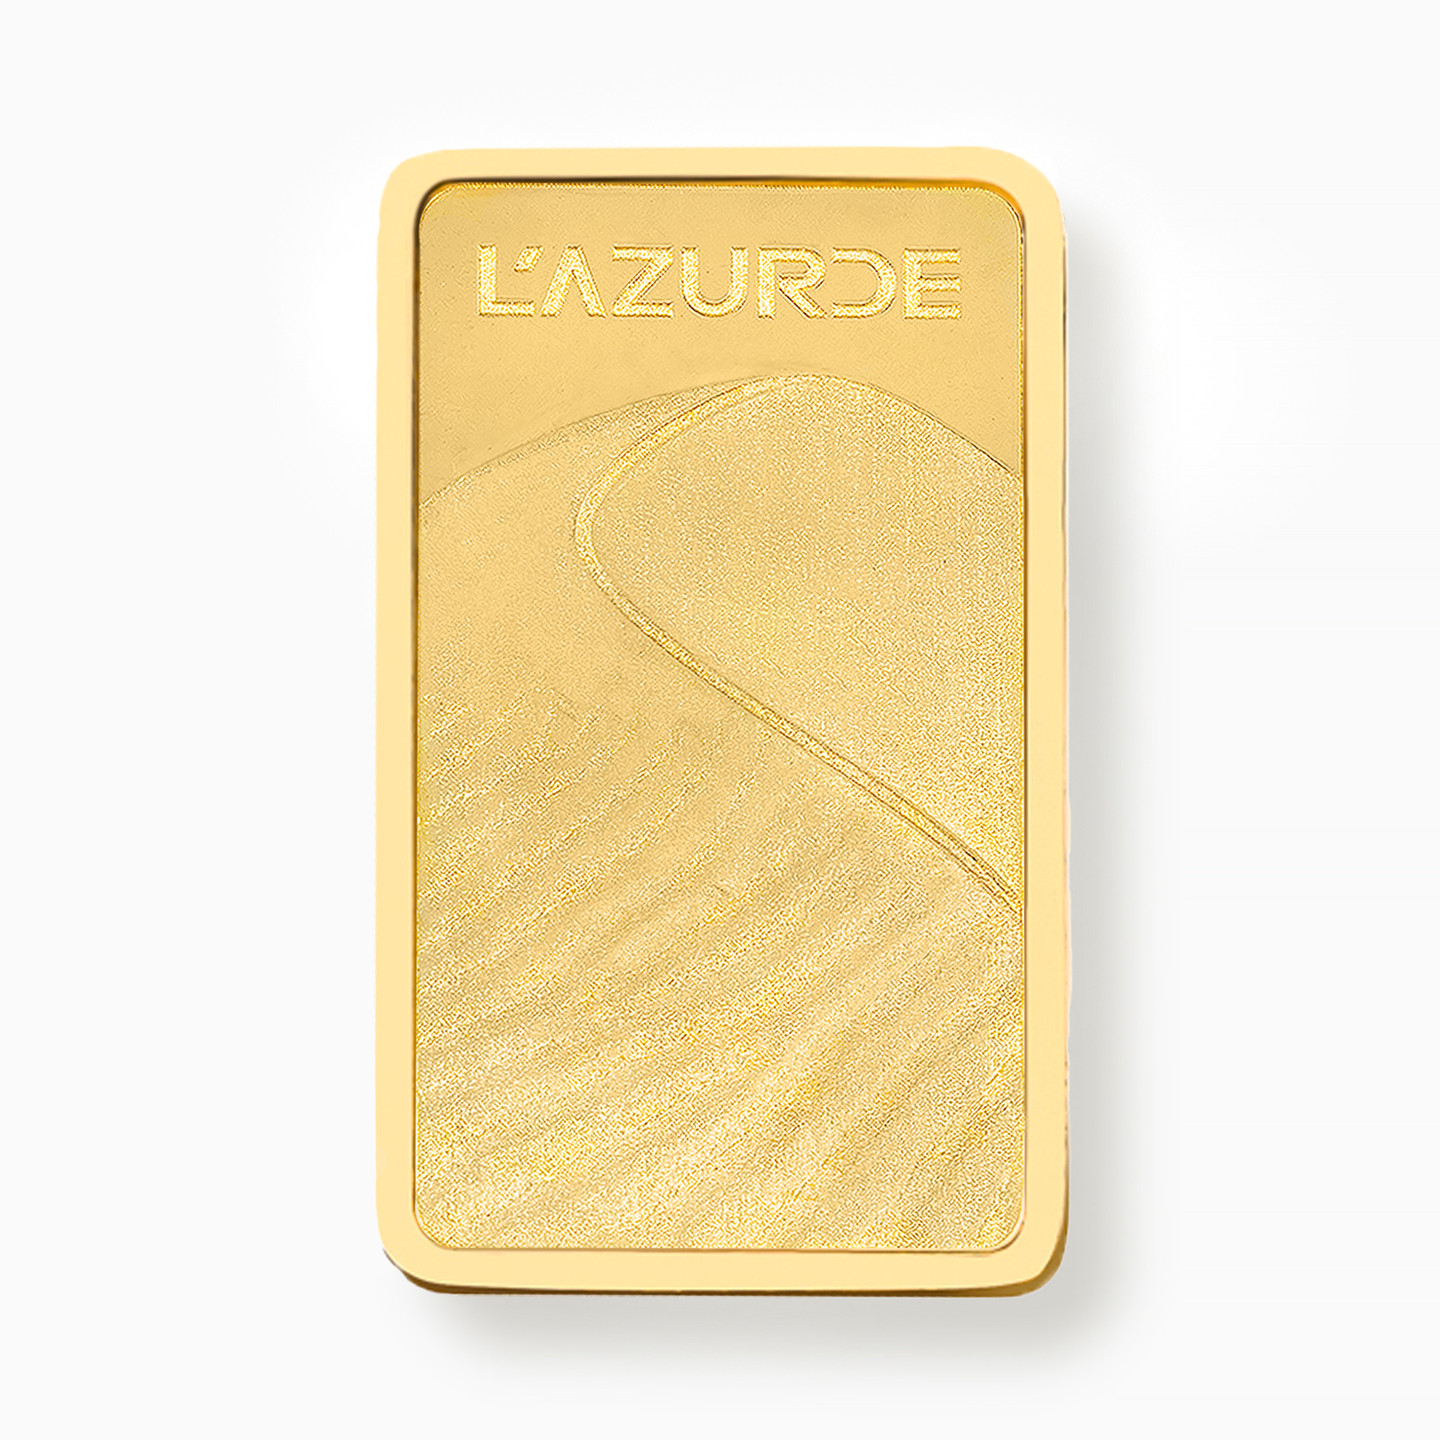 24K Gold Bar 20g - 2